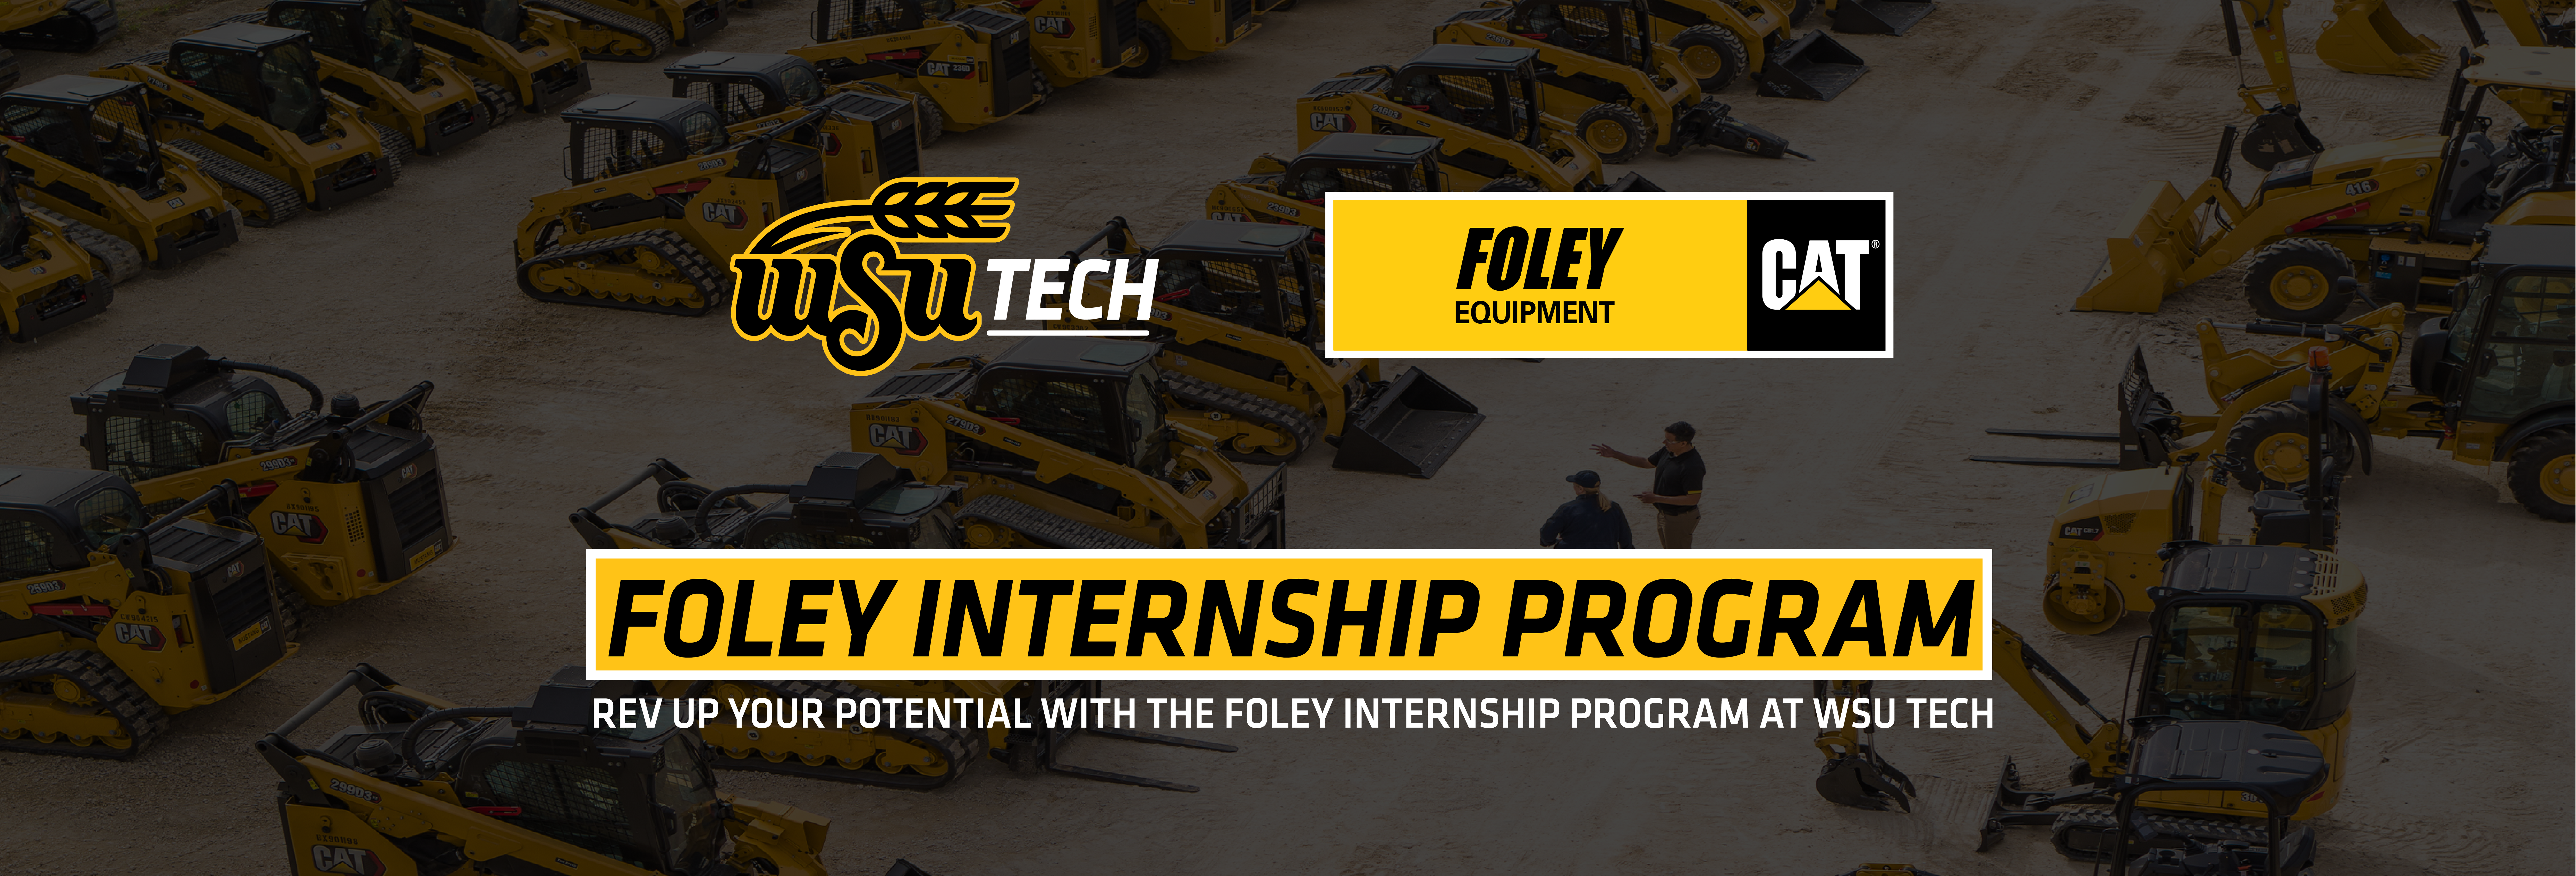 Foley Internship Program